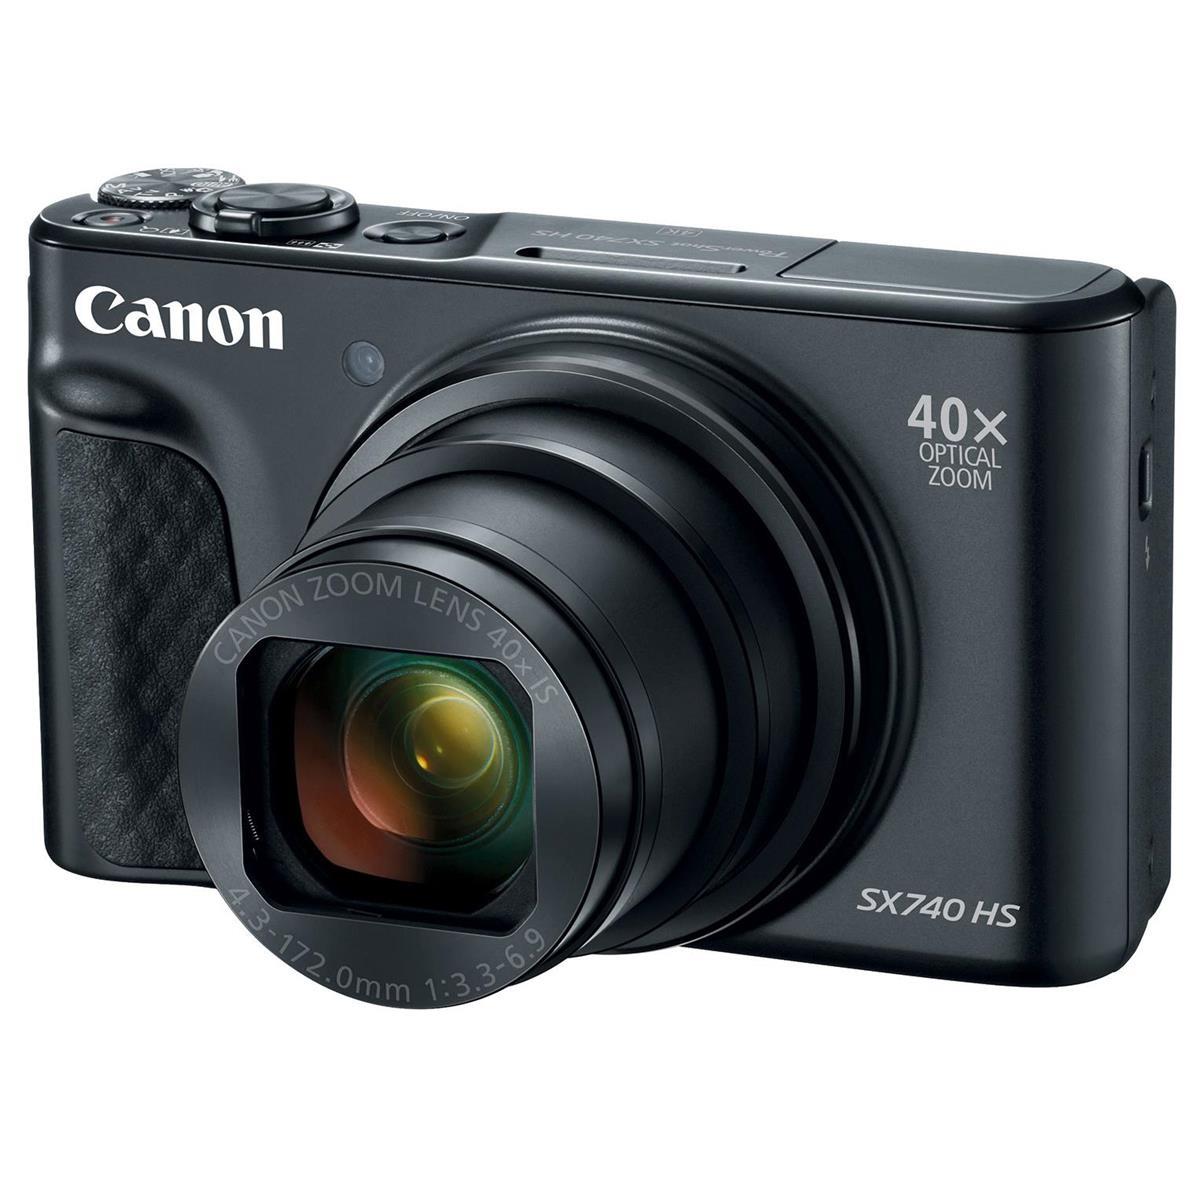 Image of Canon PowerShot SX740 HS